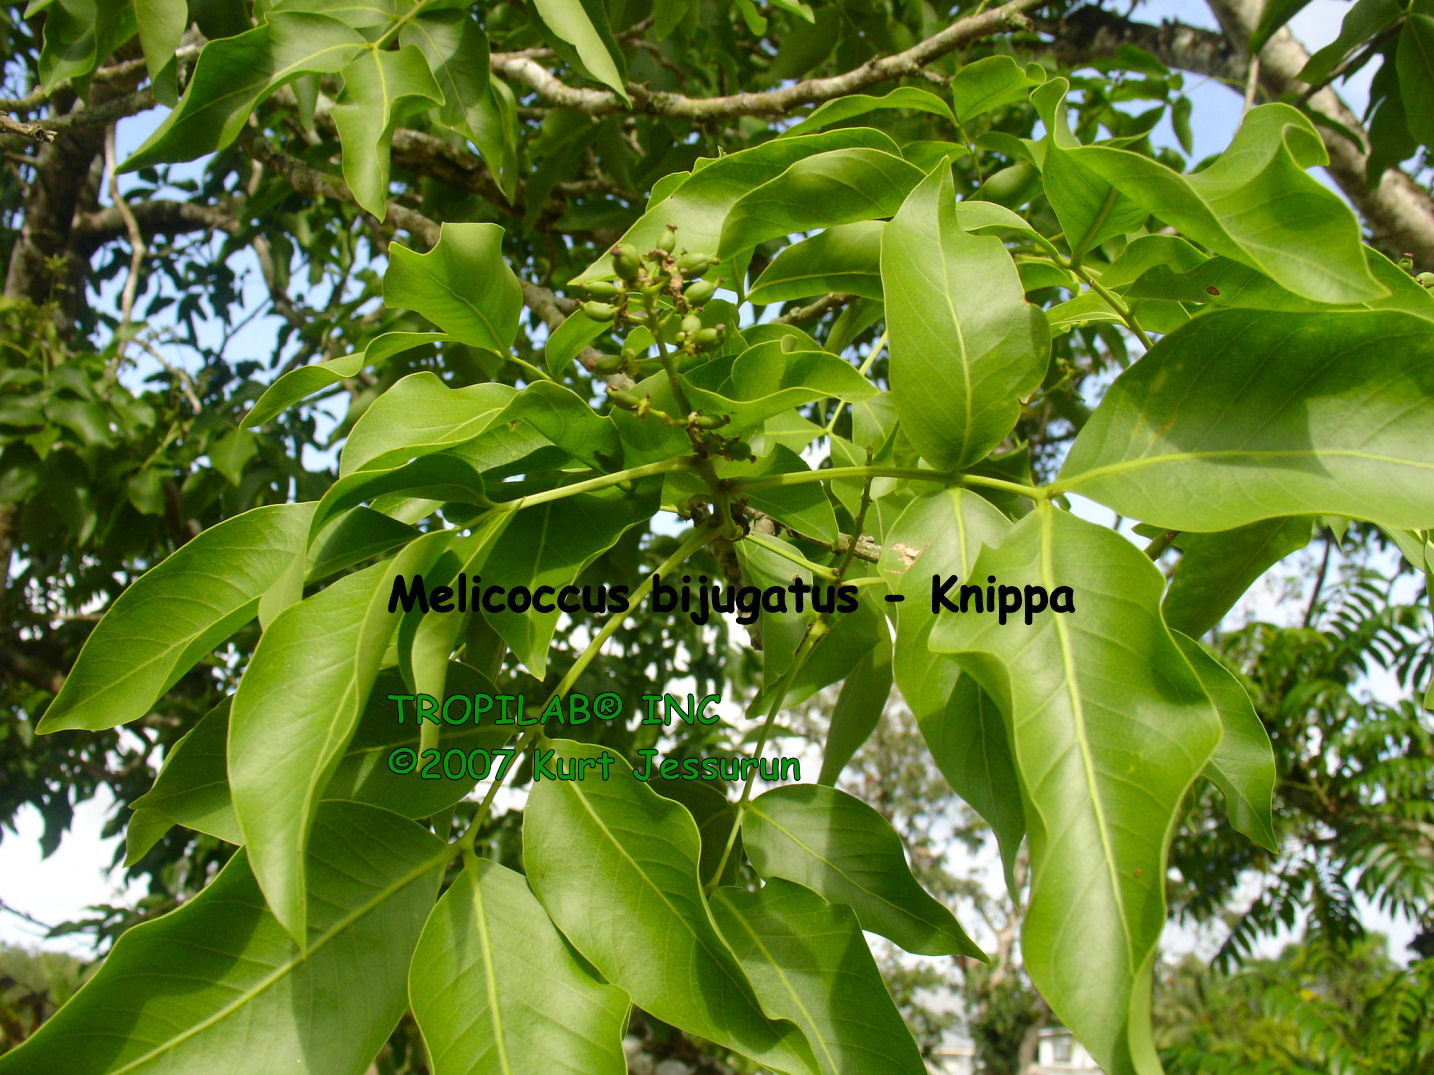 Melicoccus bijugatus - Knippa leaves